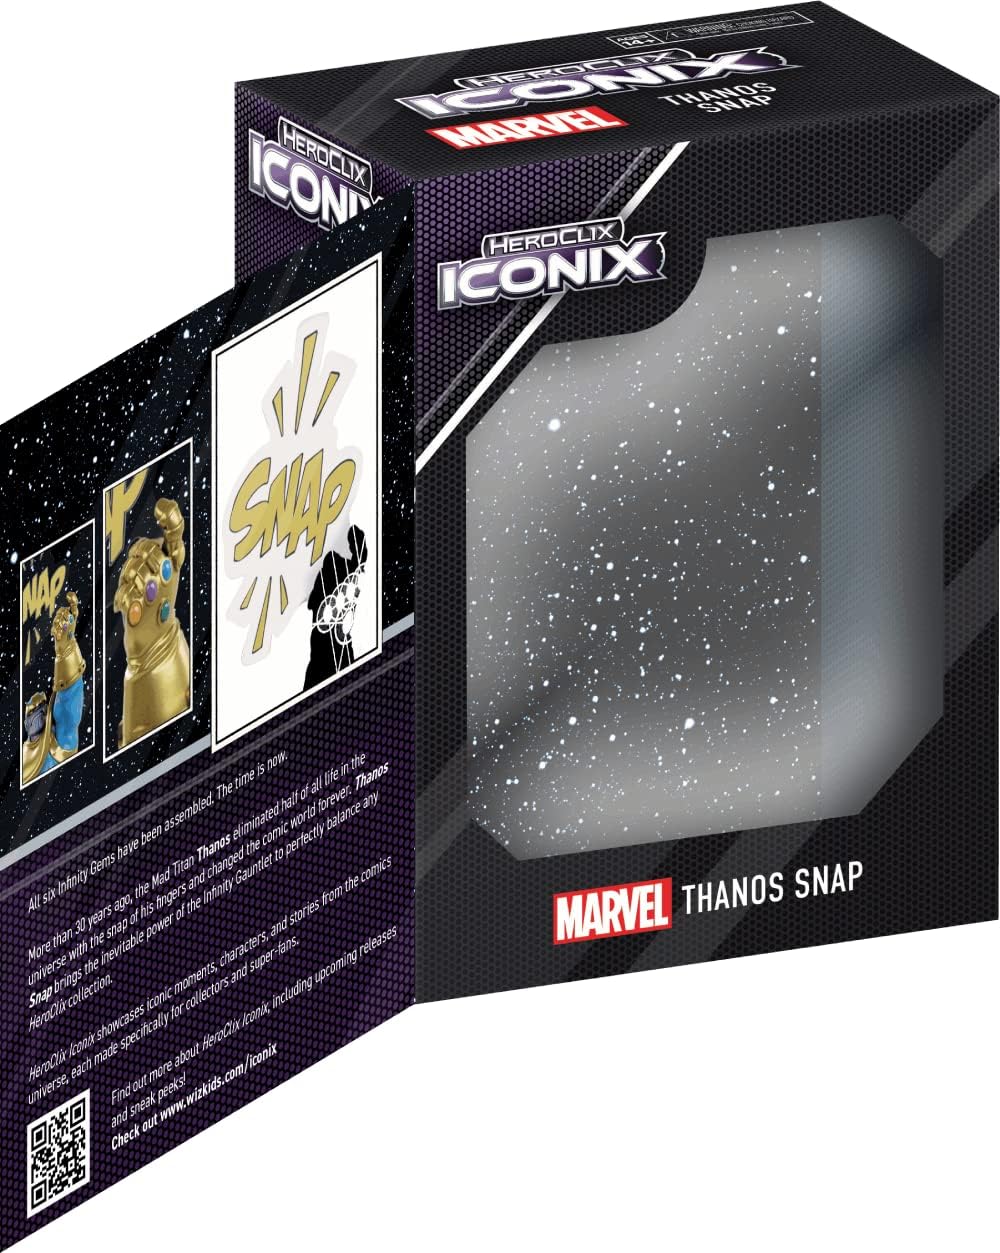 Wizkids Marvel HeroClix Iconix: Thanos Snap!